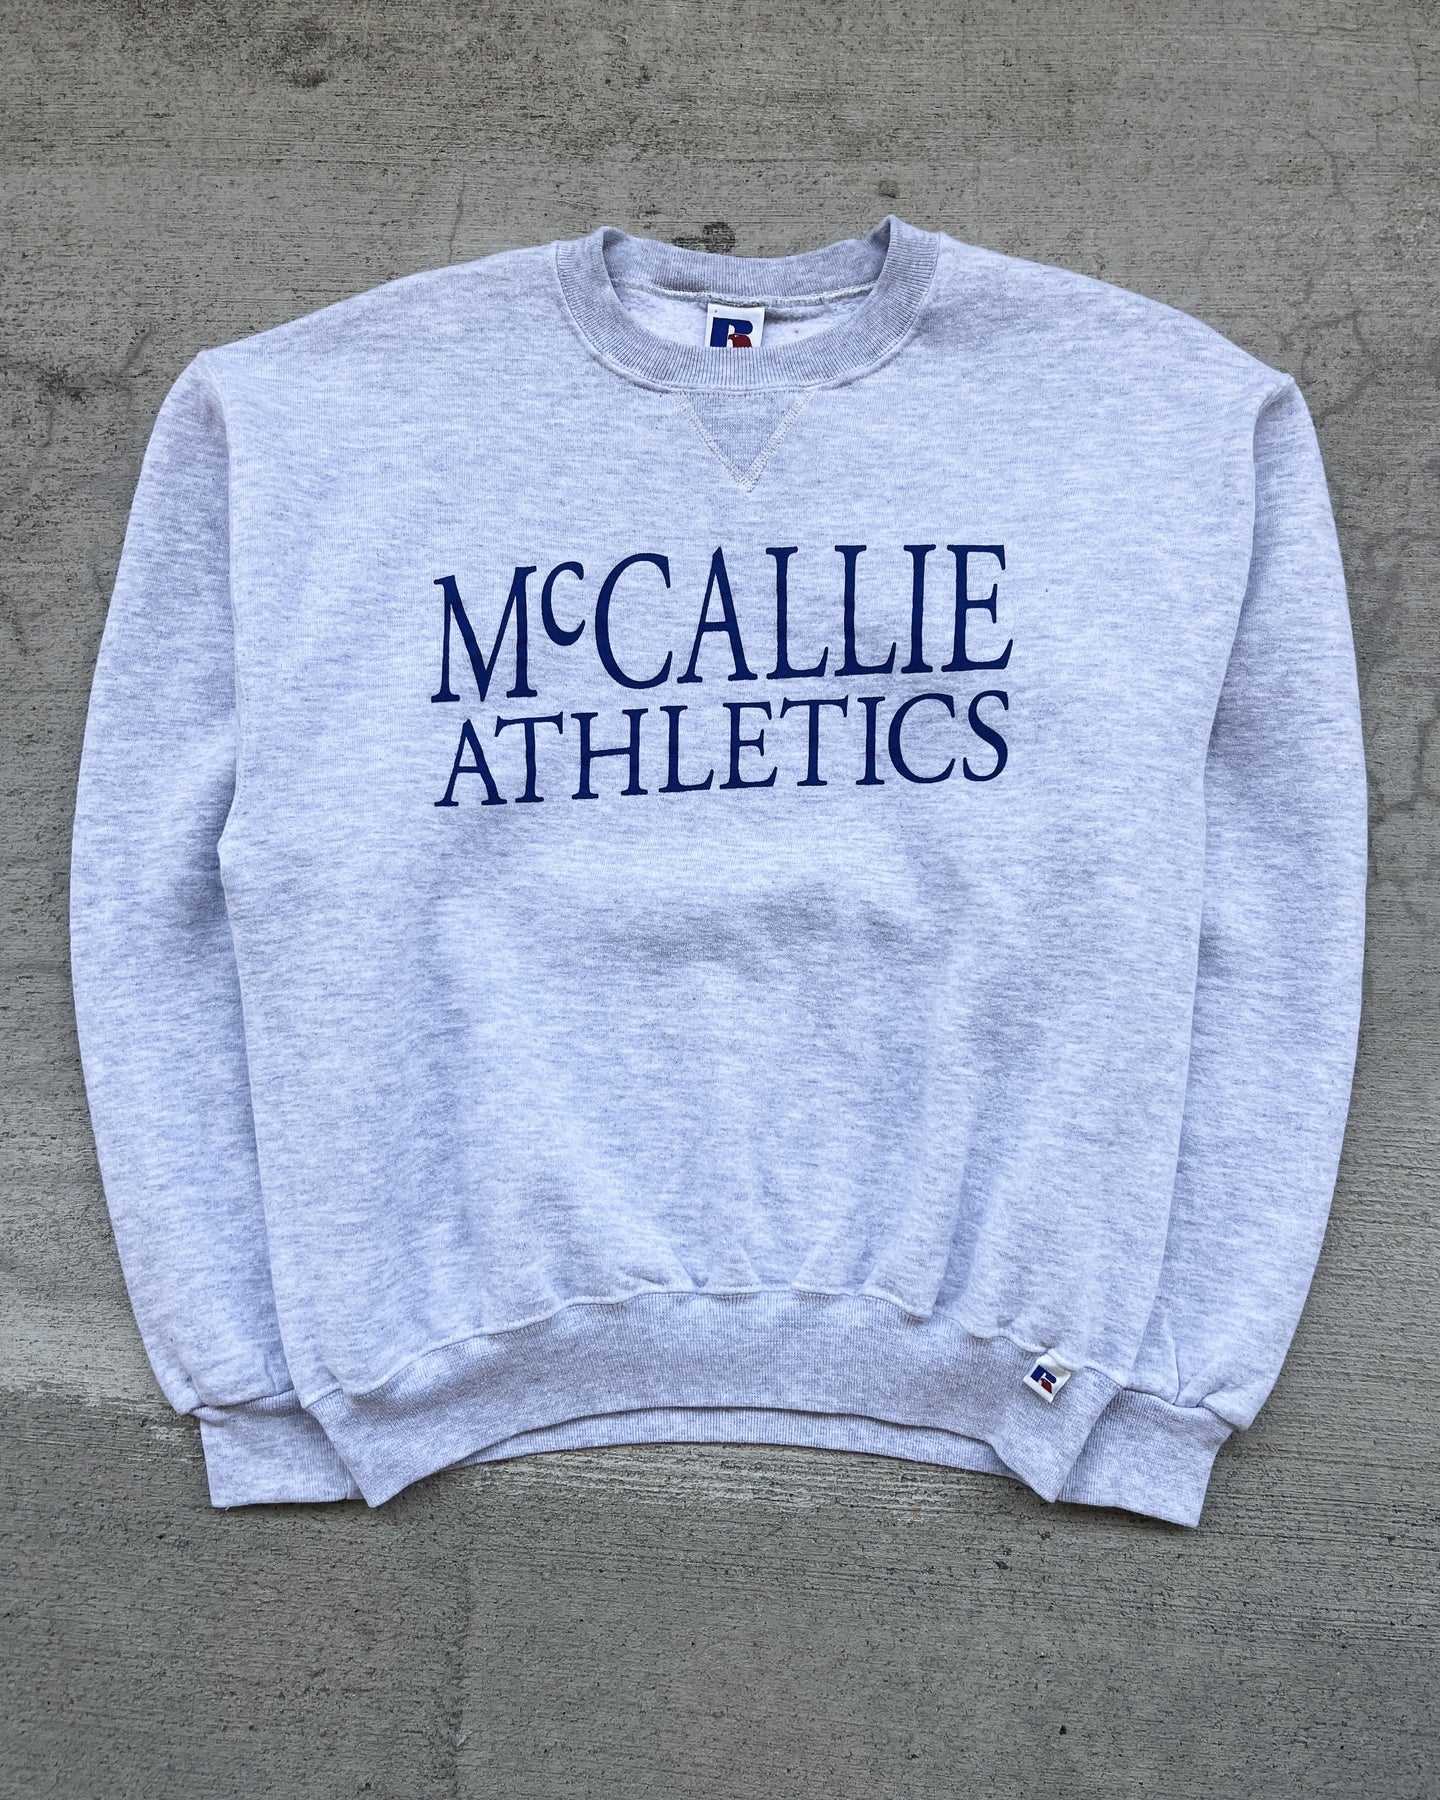 1990s Russell Athletic McCallie Crewneck Sweatshirt - Large